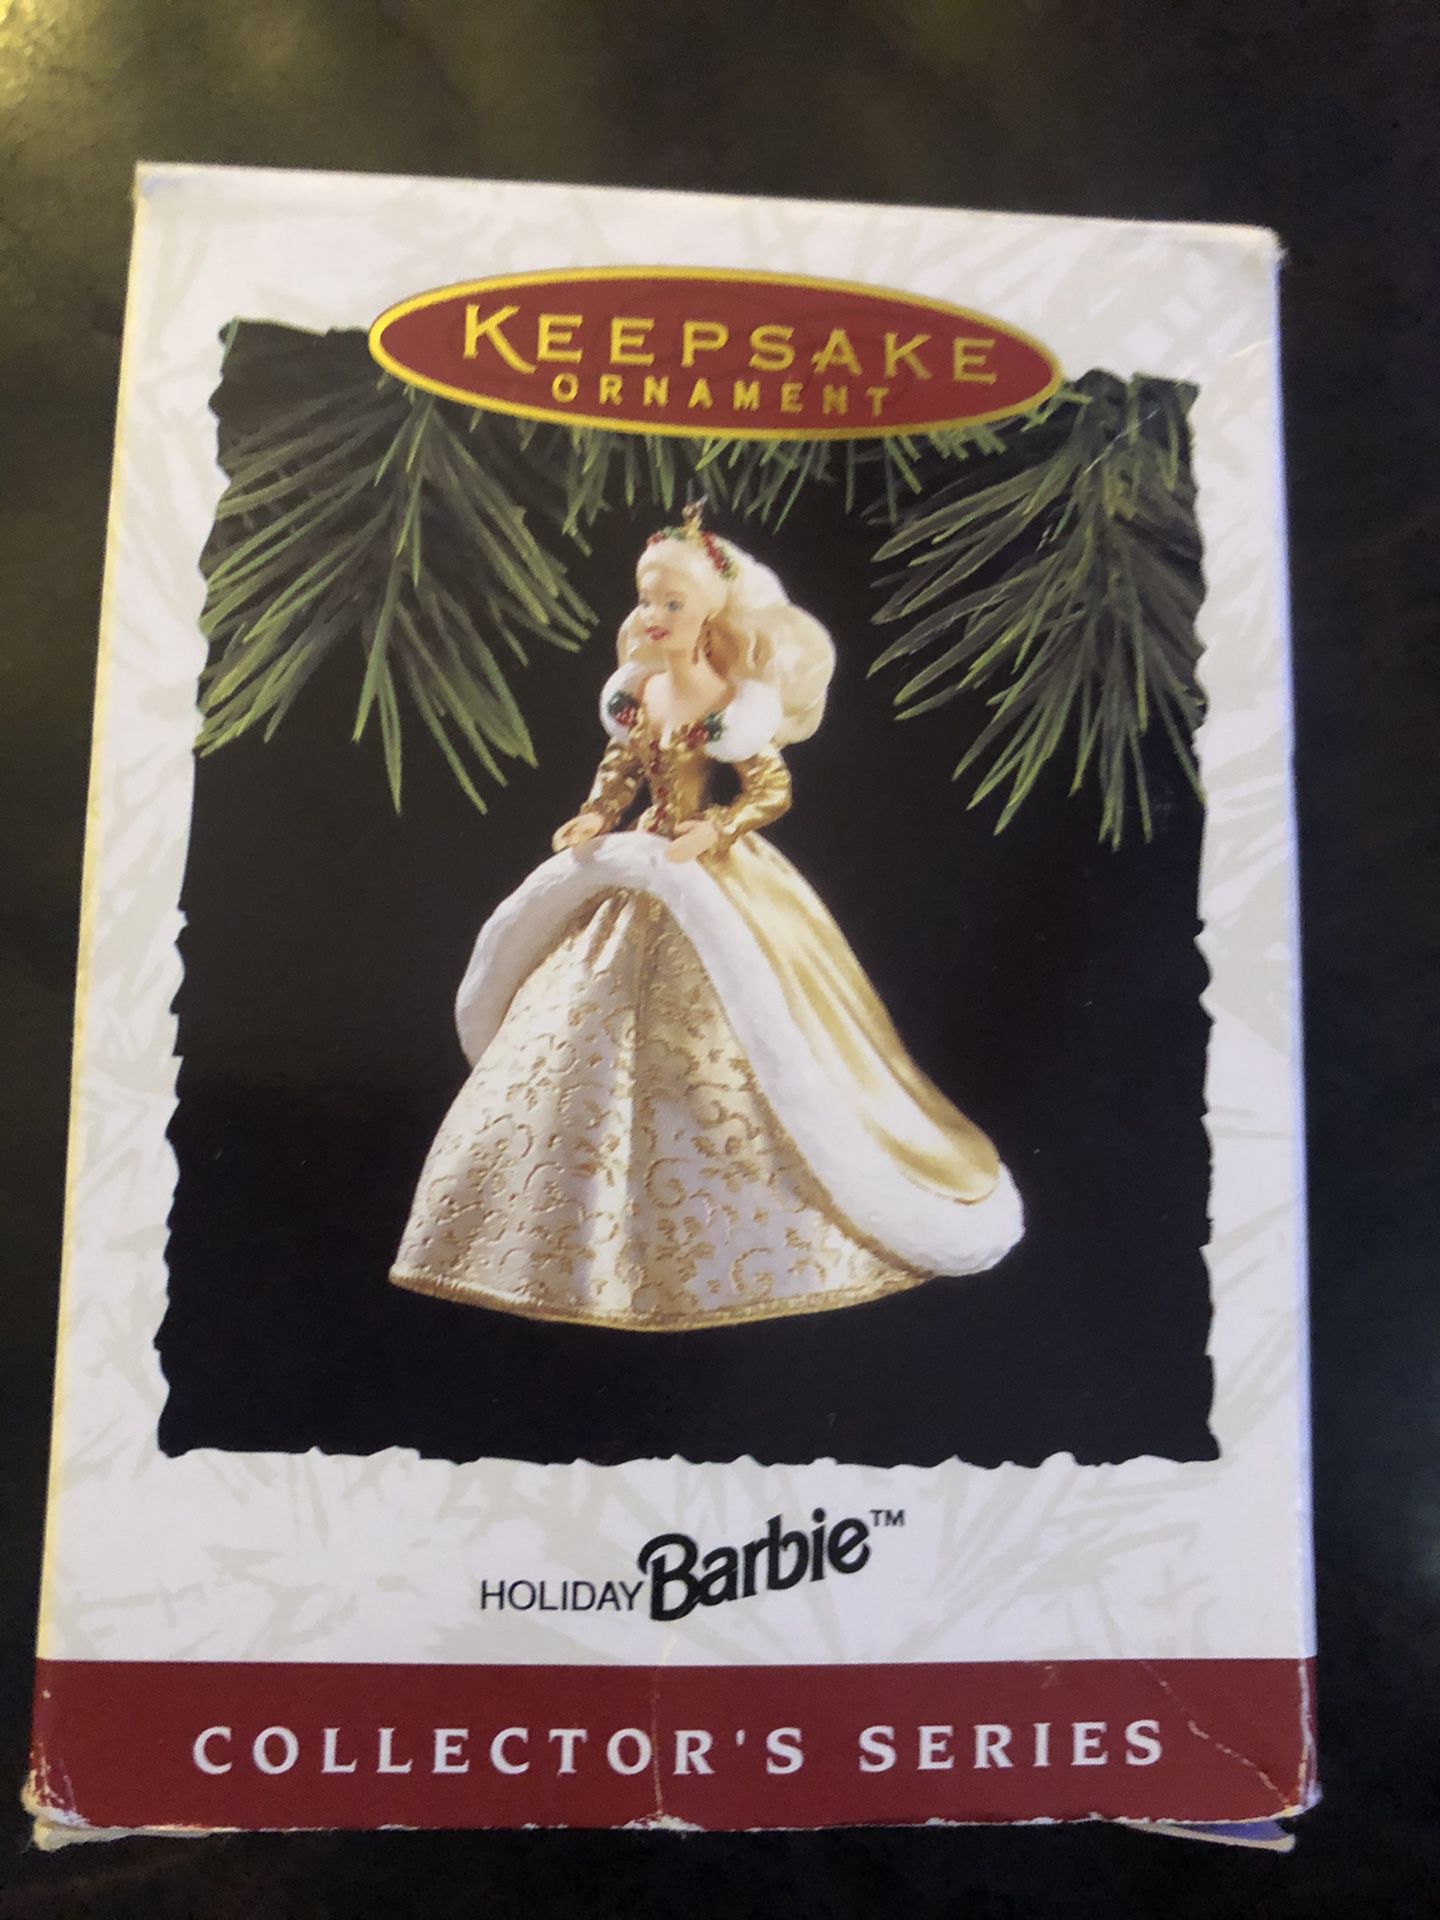 Hallmark Holiday Barbie Ornament